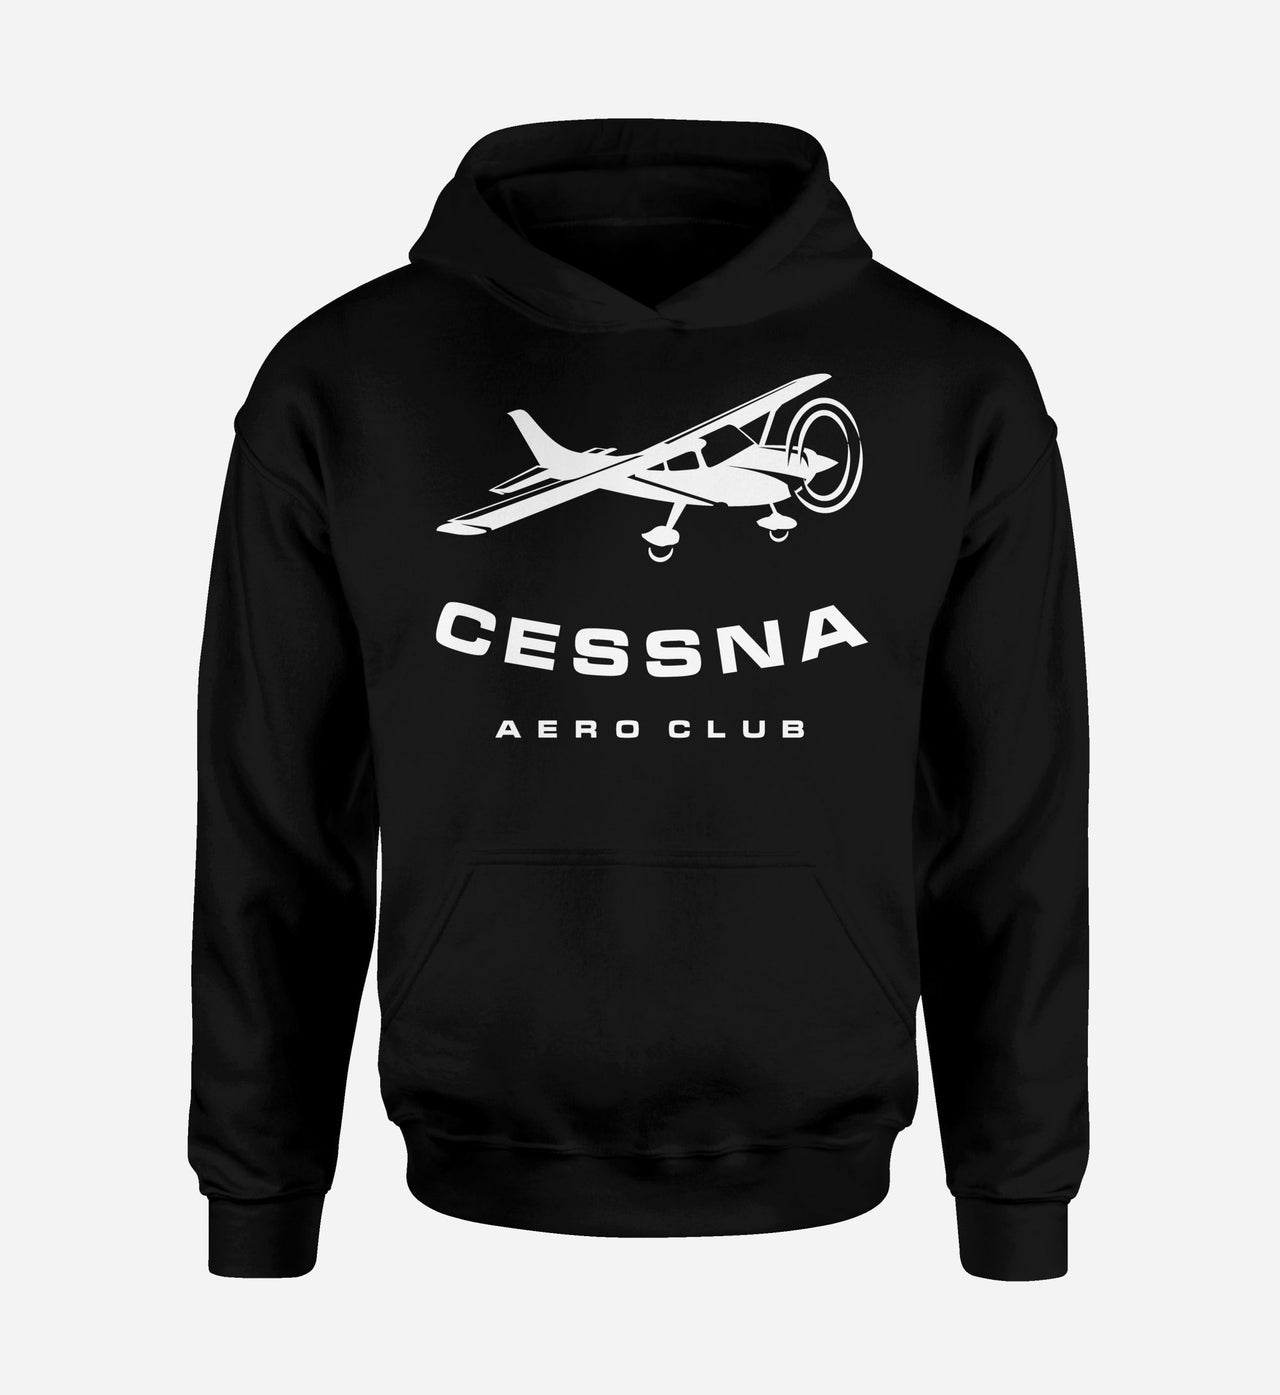 Cessna Aeroclub Designed Hoodies